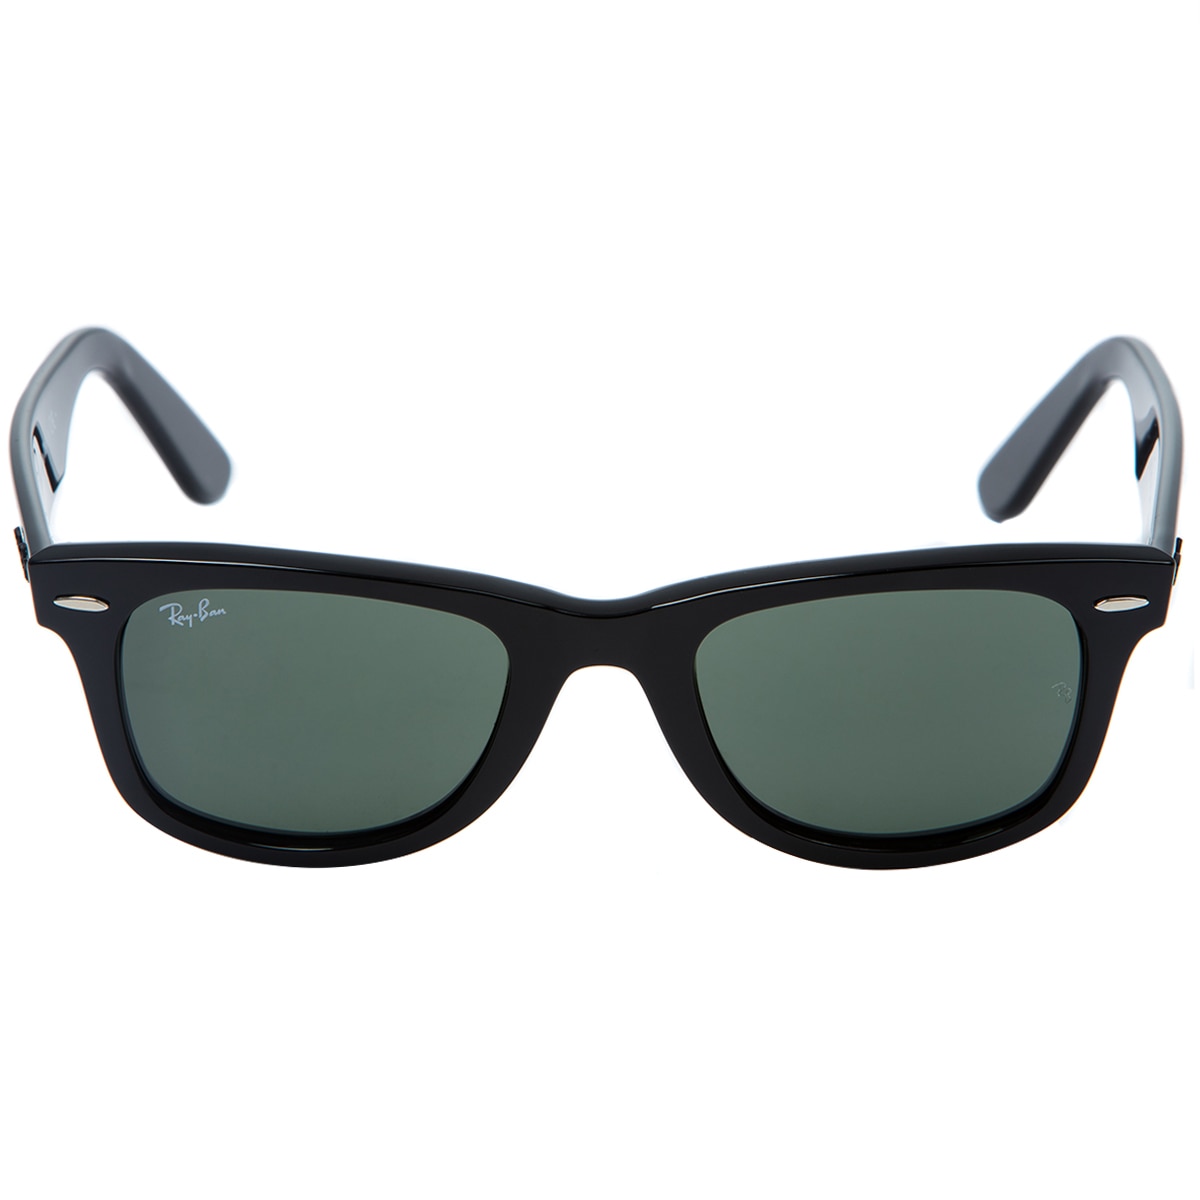 RAYBAN Sunglasses Wayfarer - Black